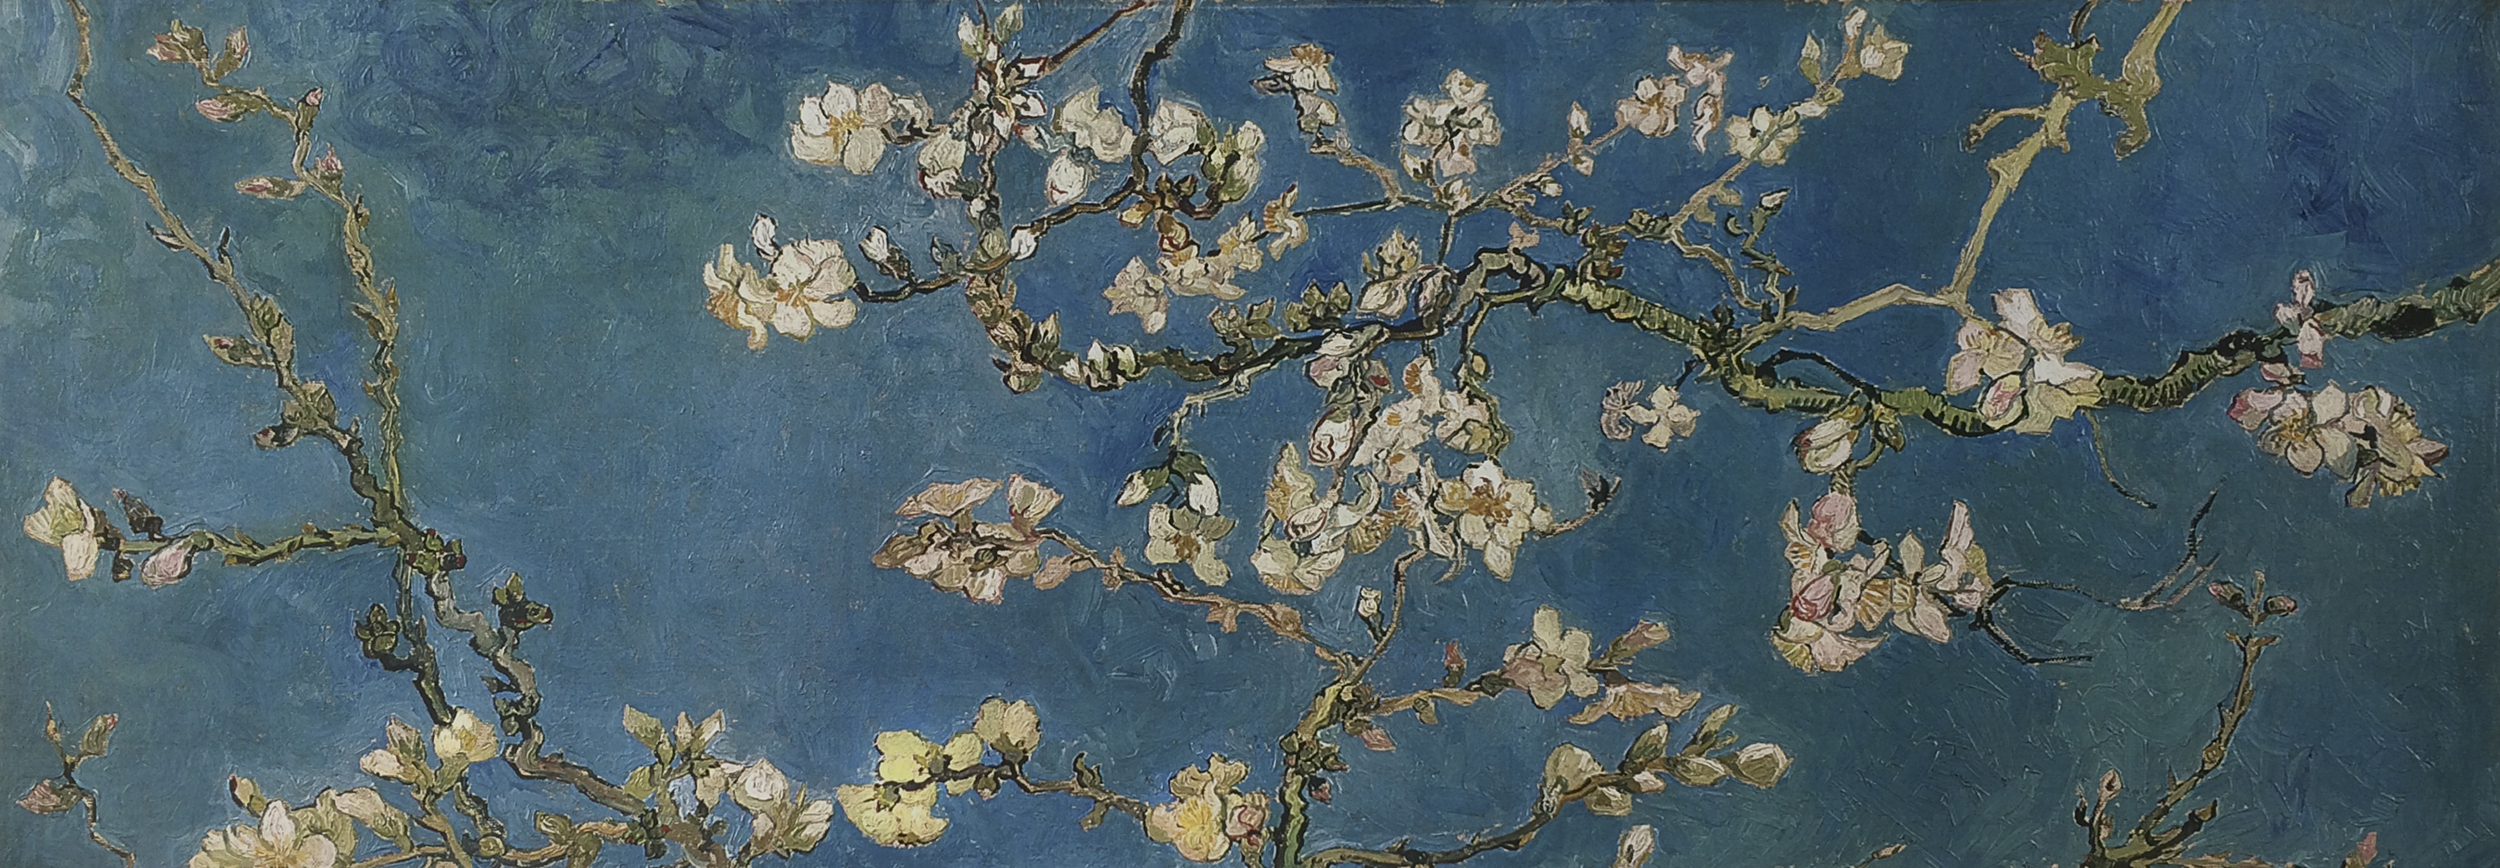 Almond Blossoms, Saint-Remy, 1890